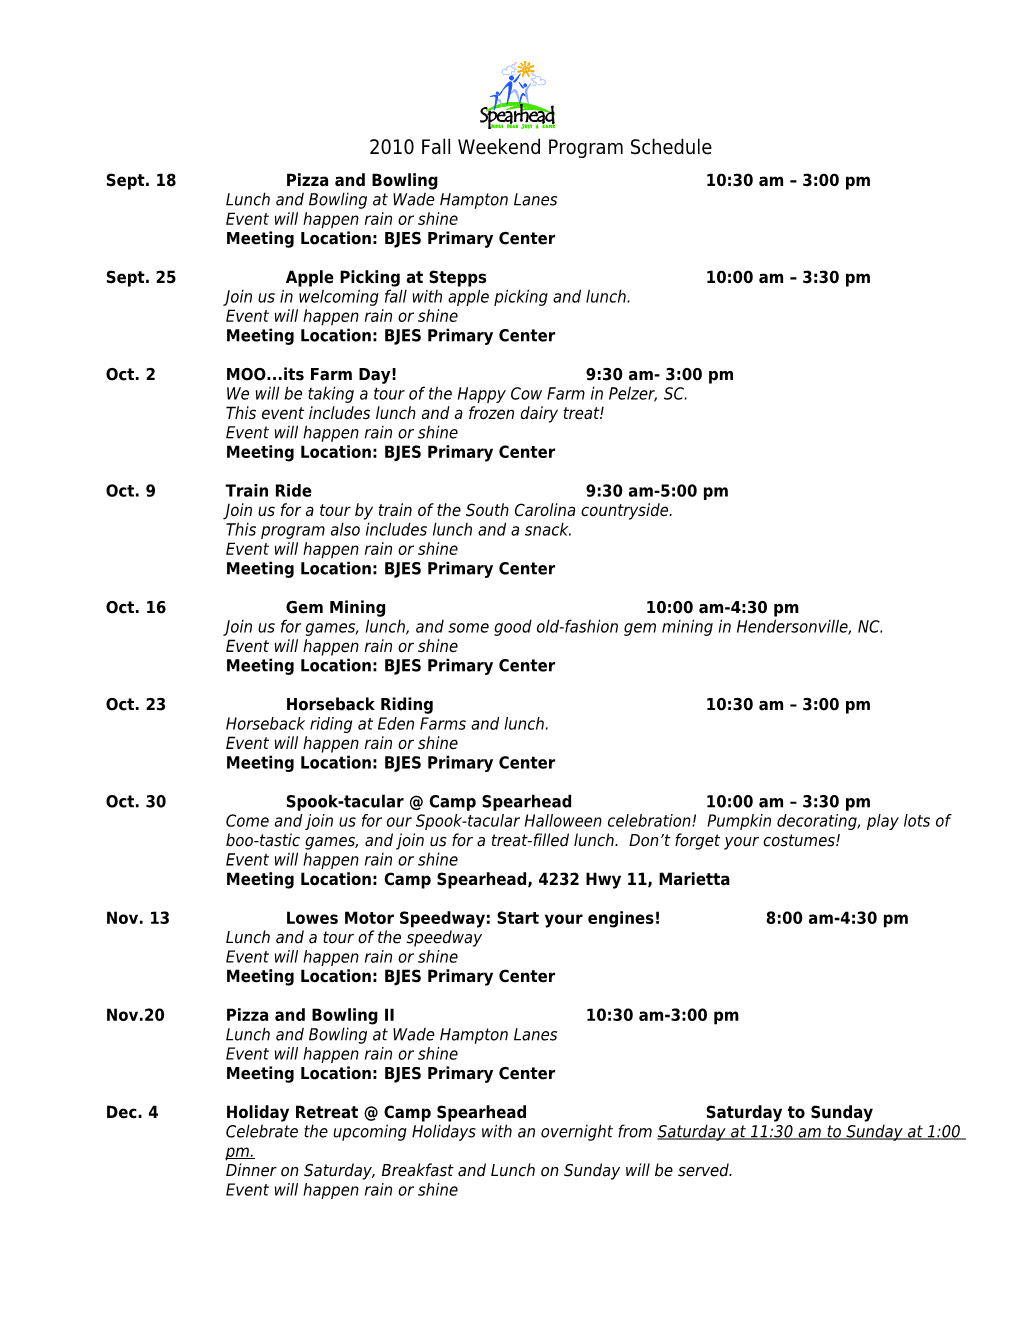 2009 Fall Weekend Program Schedule